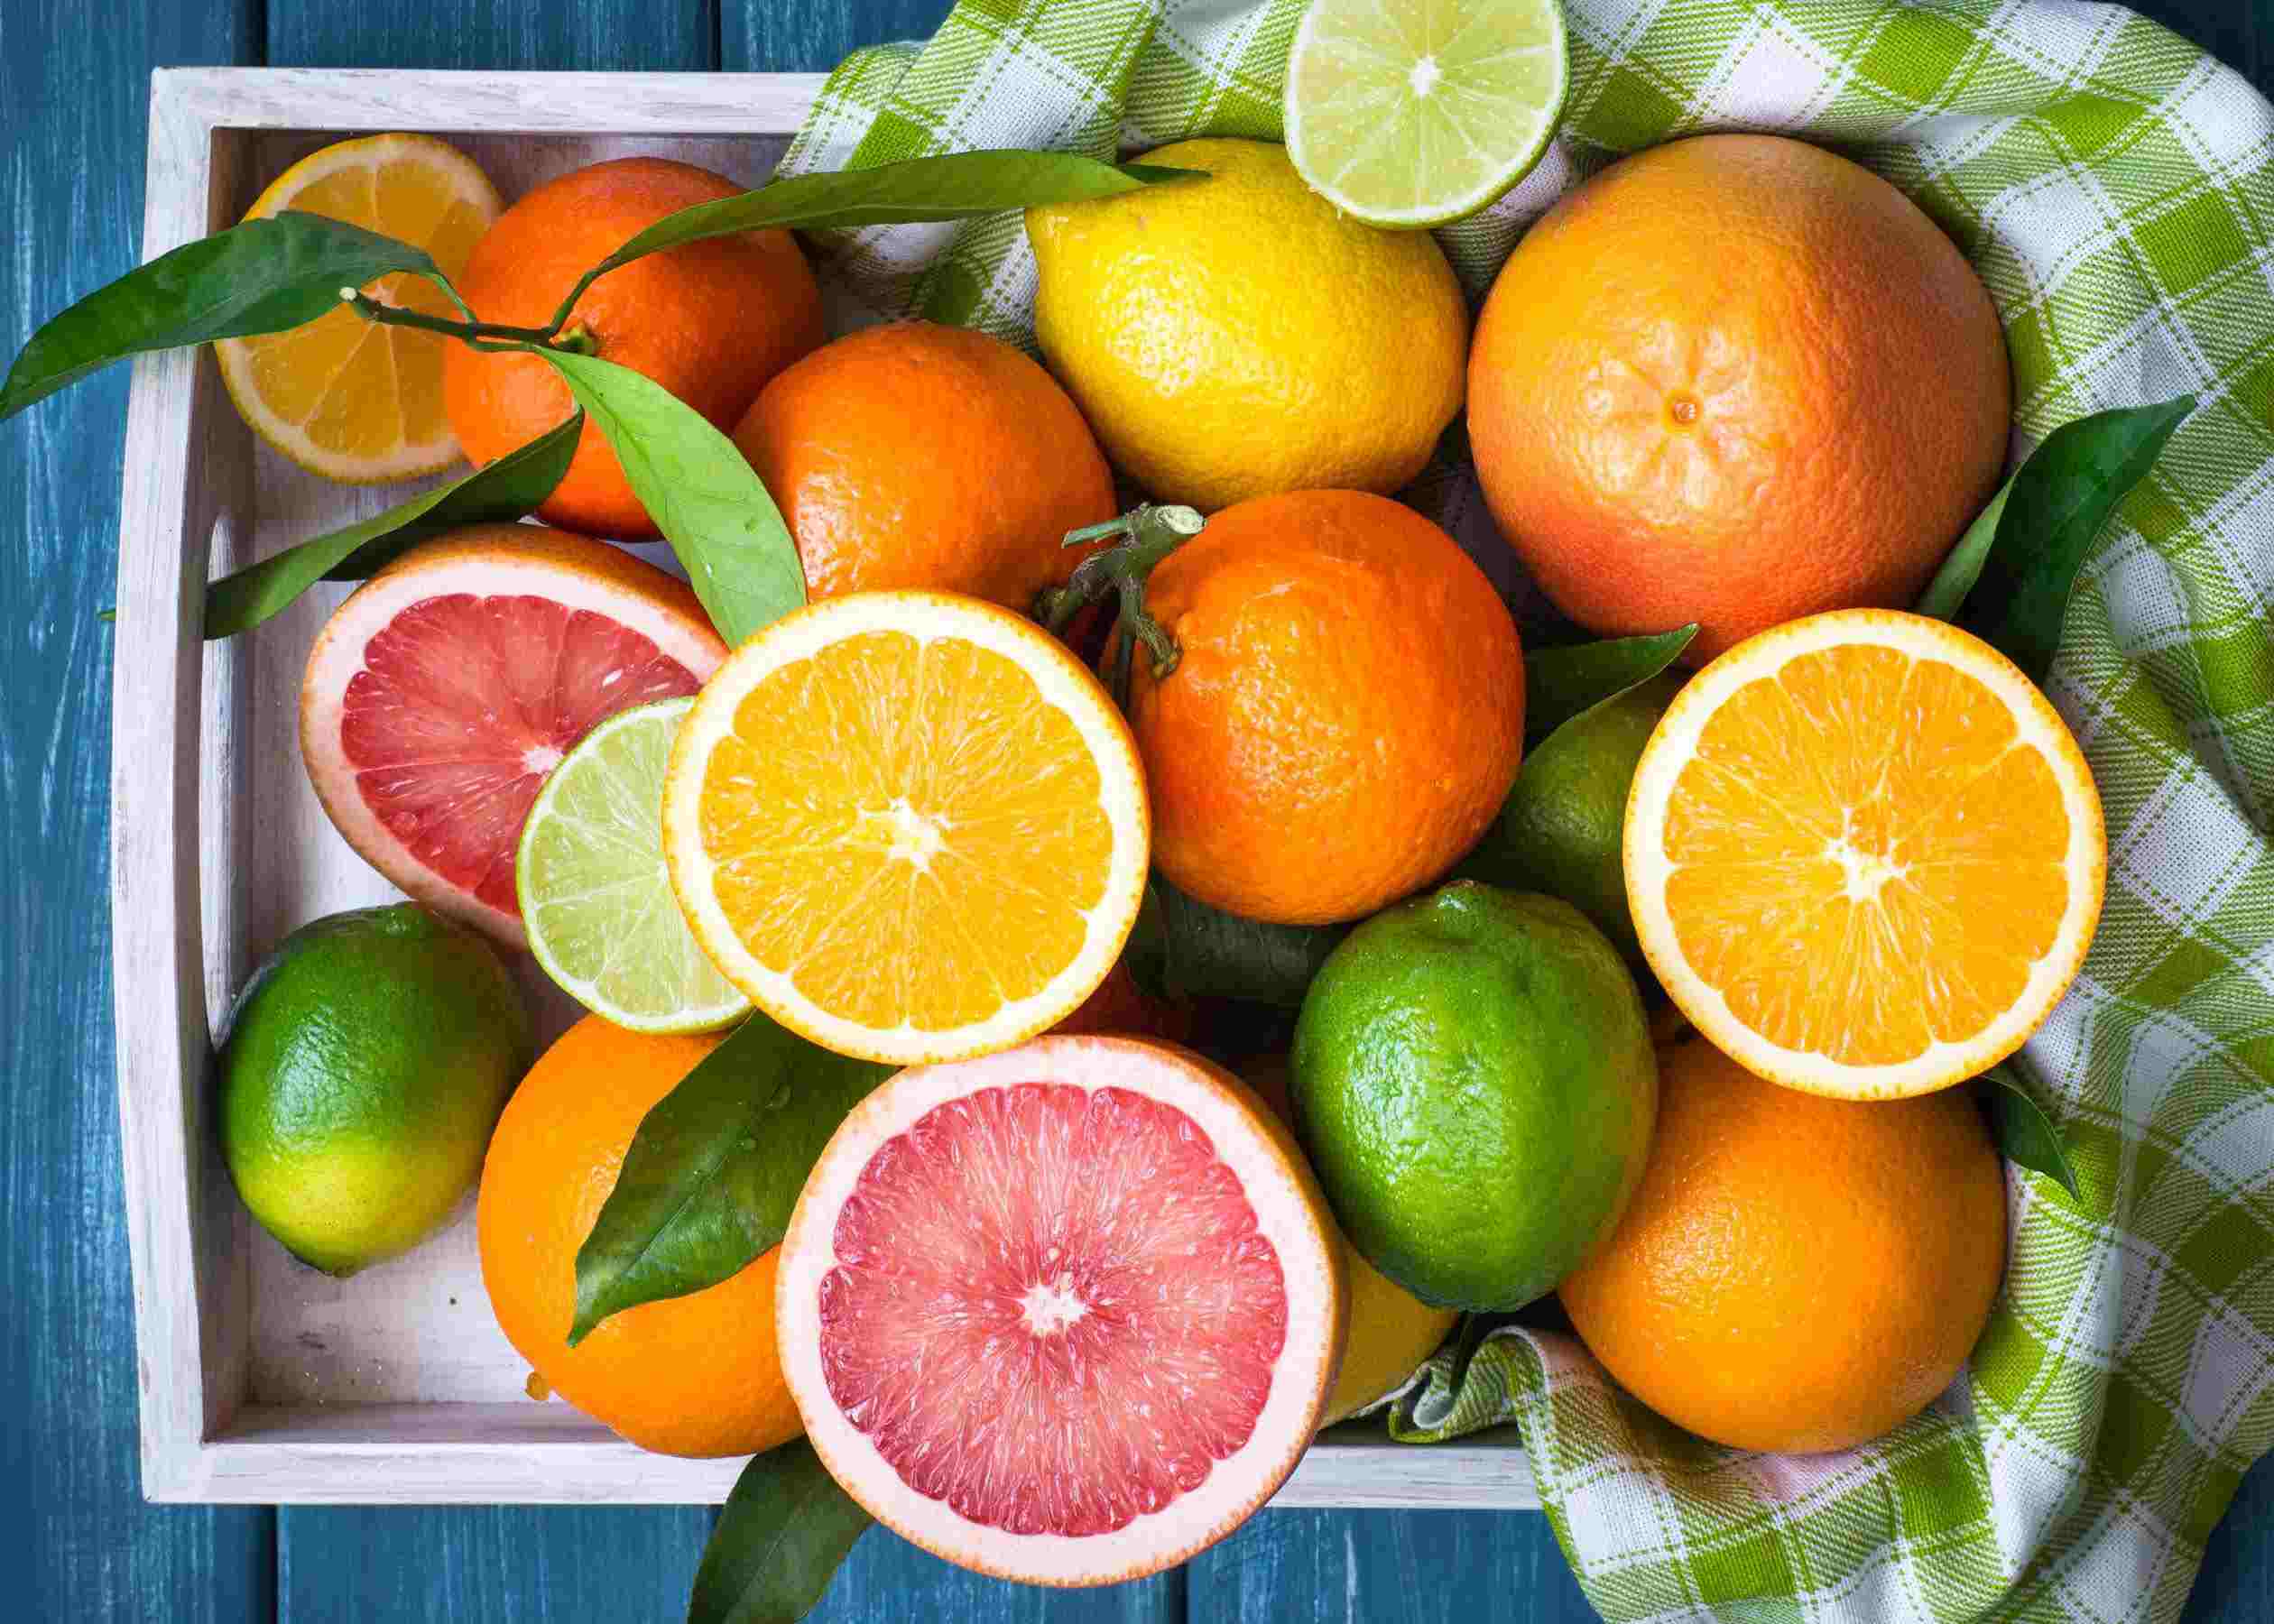 День апельсина и лимона картинки. Цитрус мандарин +апельсин. Фрукт цитрус кумкват. Апельсин, лимон, мандарин, грейпфрут, Цитрон. Лайм лимон апельсин мандарин.